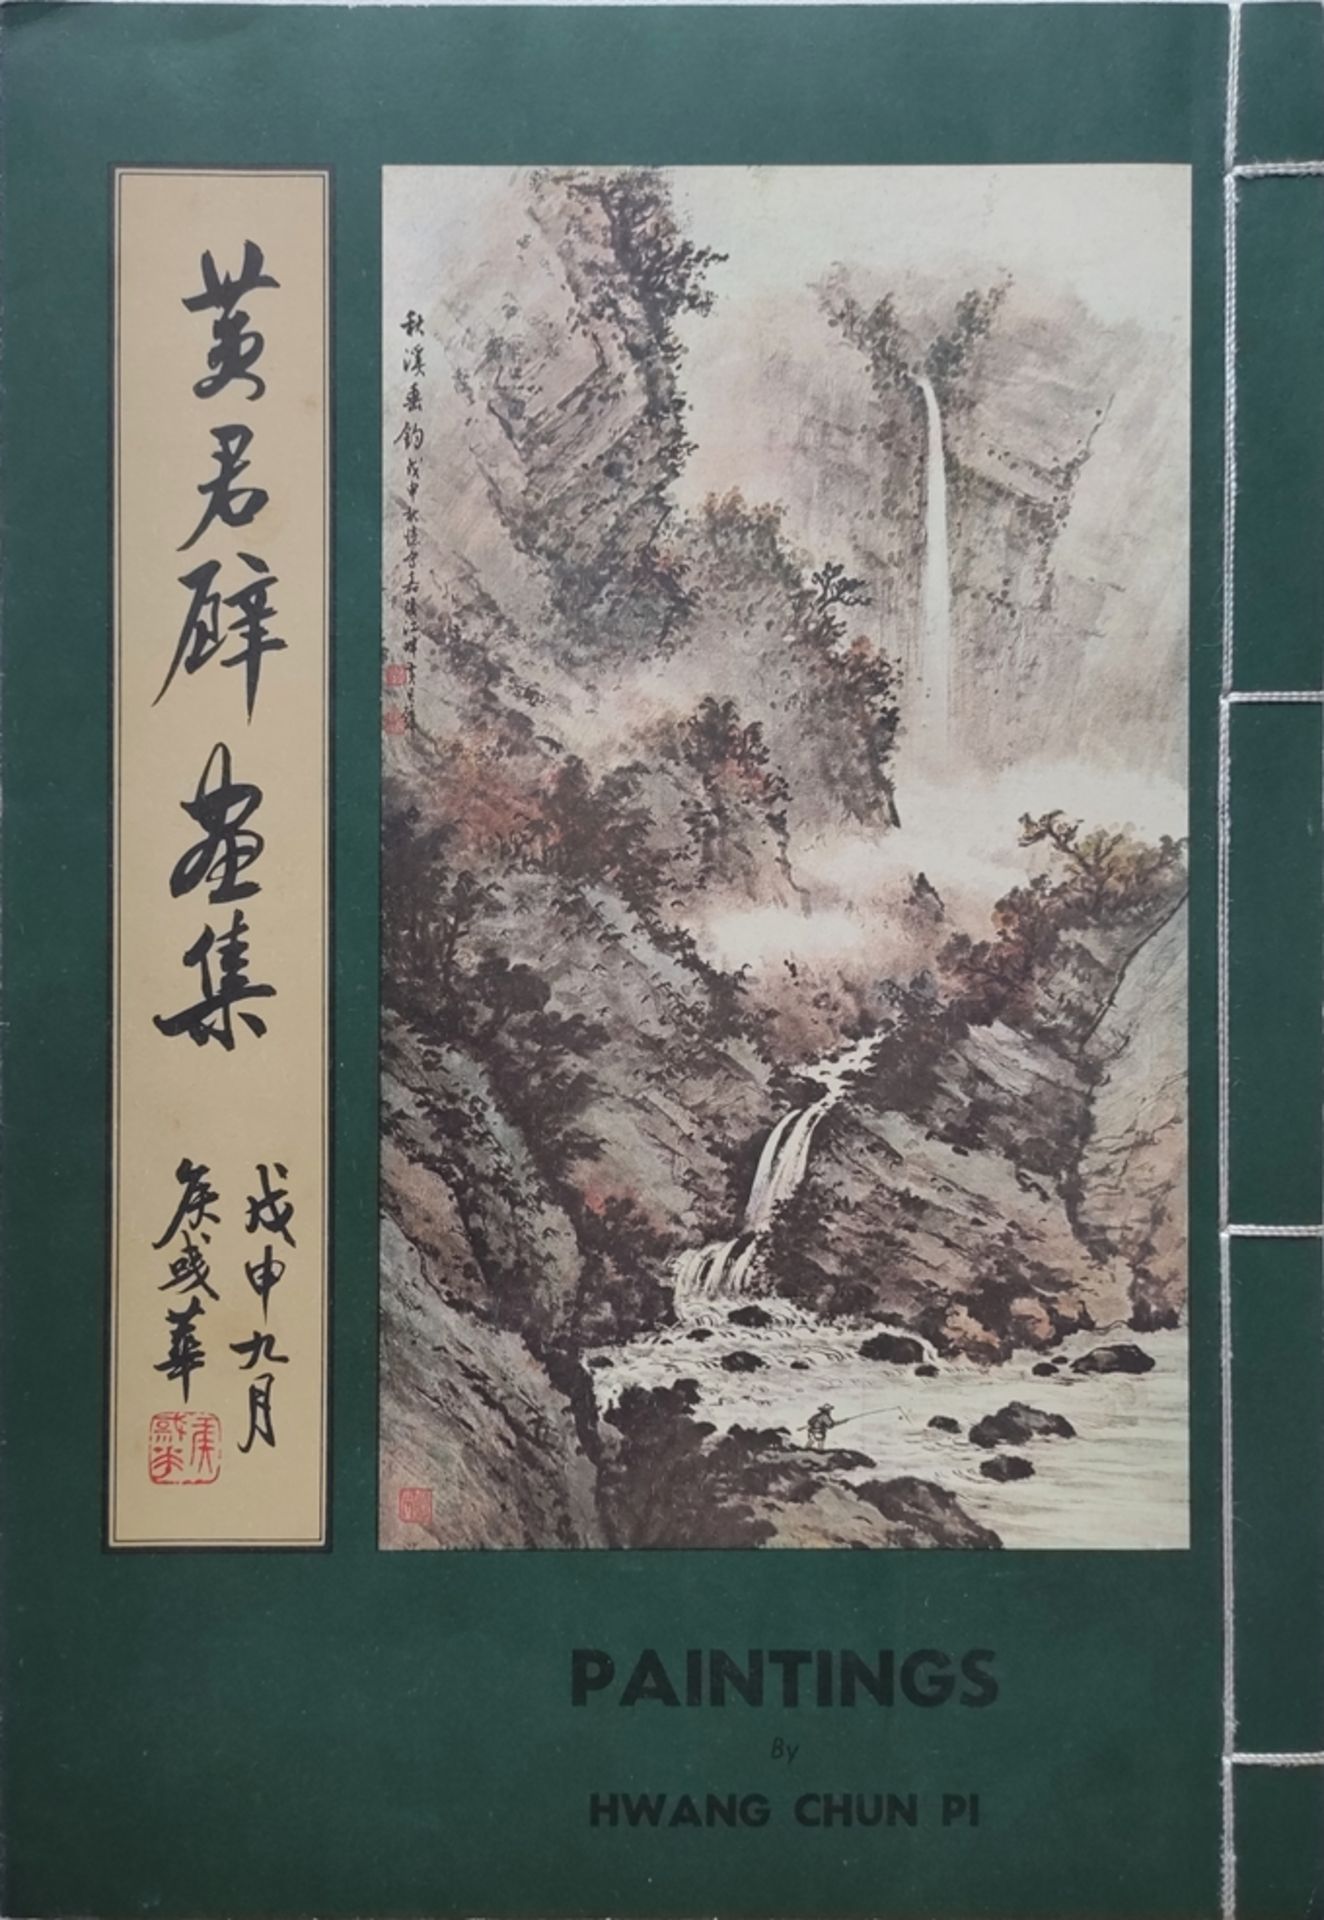 Hwang Chun Pi (1898 - 1991 Taipei, Taiwan) "Catalogue of paintings No. 8", Taipei, Taiwan, China, 1